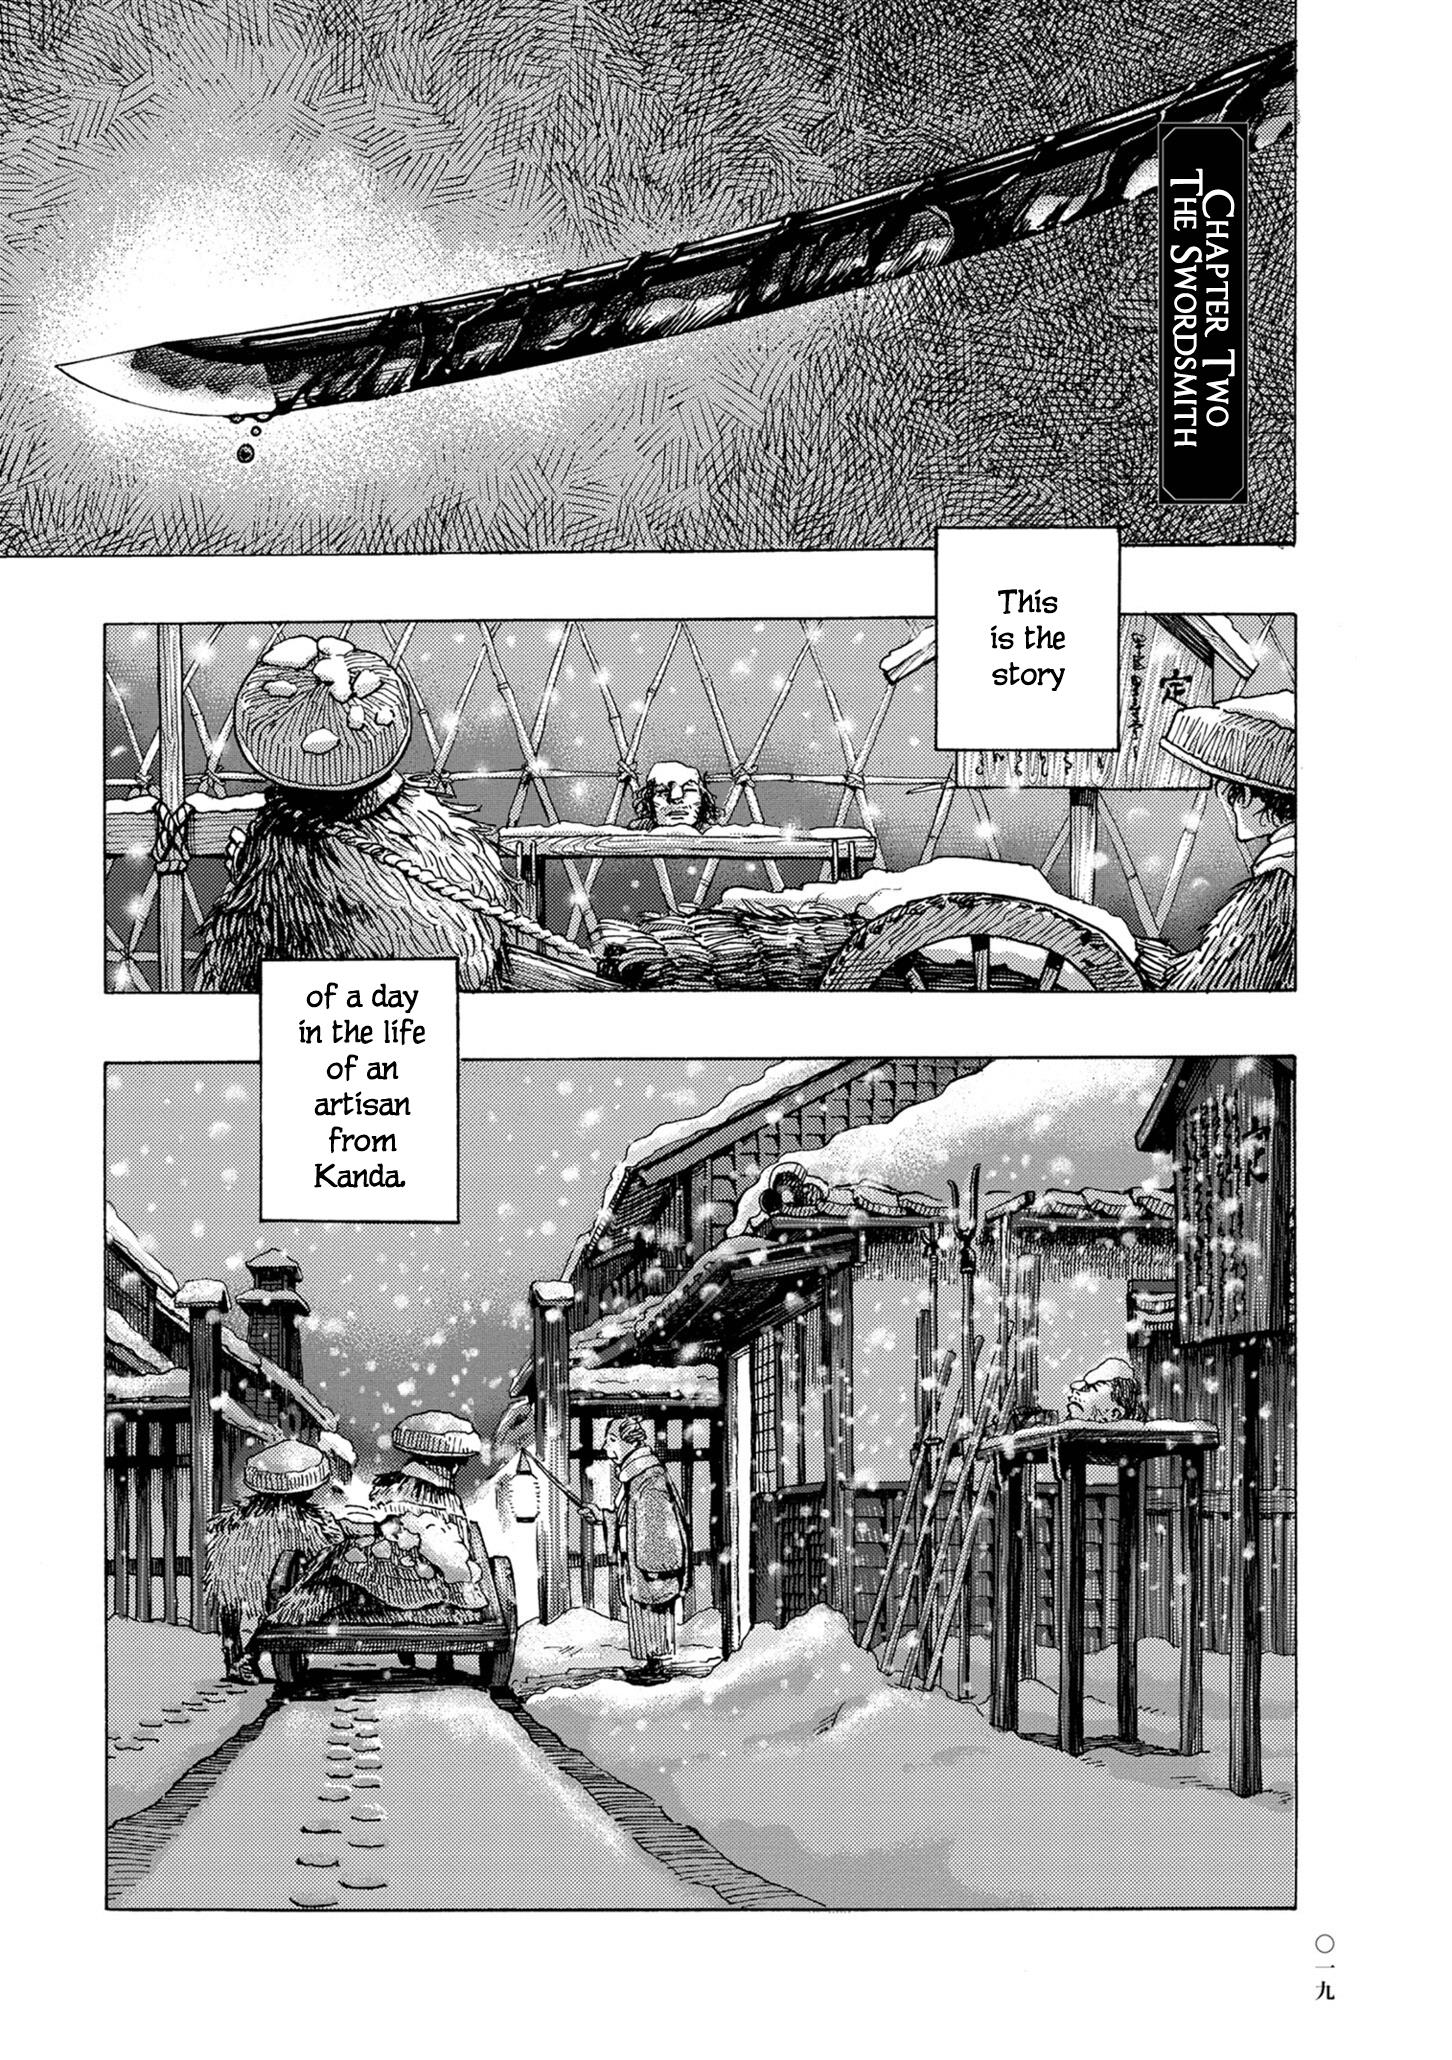 Kanda Gokura-Chou Shokunin-Banashi Vol.1 Chapter 2: The Swordsmith - Picture 1